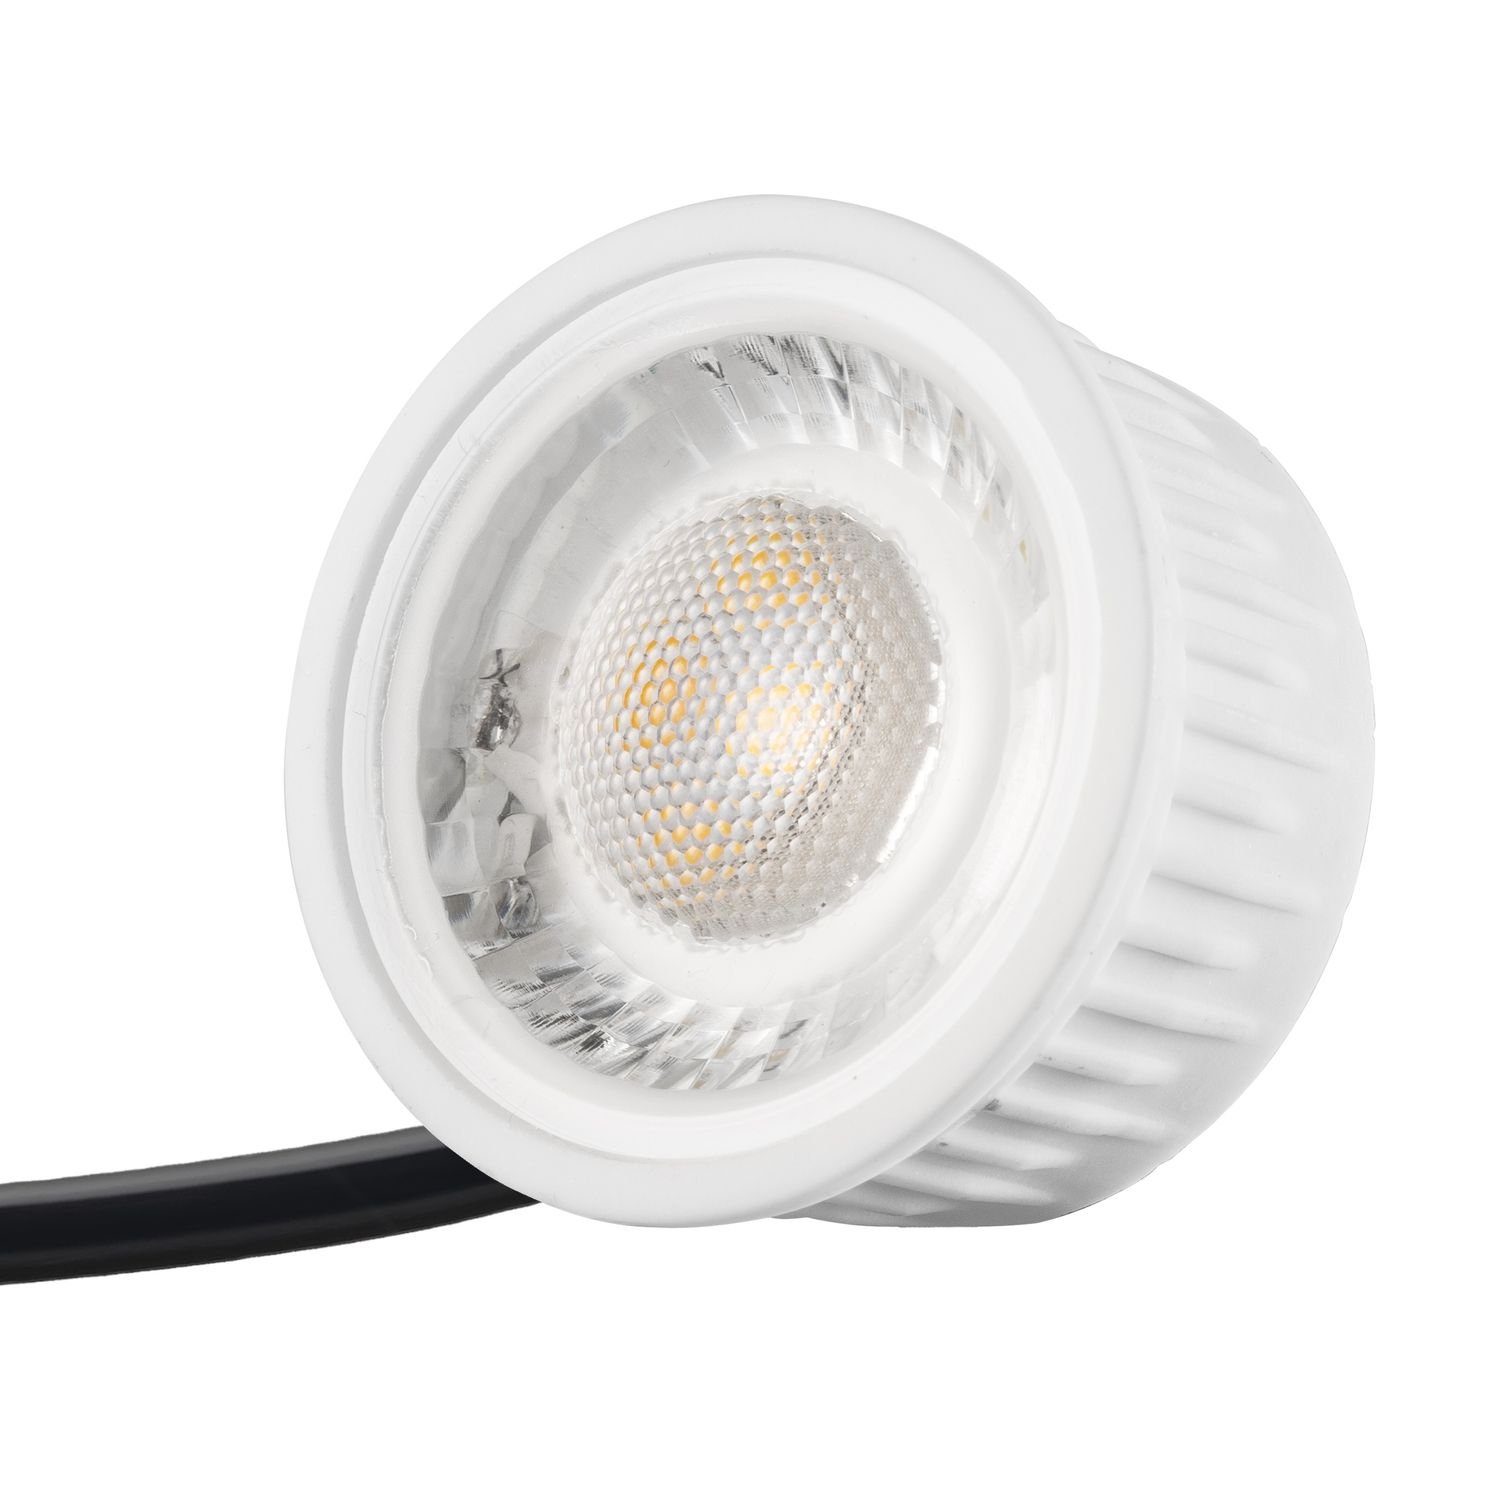 Einbaustrahler Einbaustrahler Leuchtmitte LEDANDO LED extra Set mit in weiß flach IP44 3er LED 5W